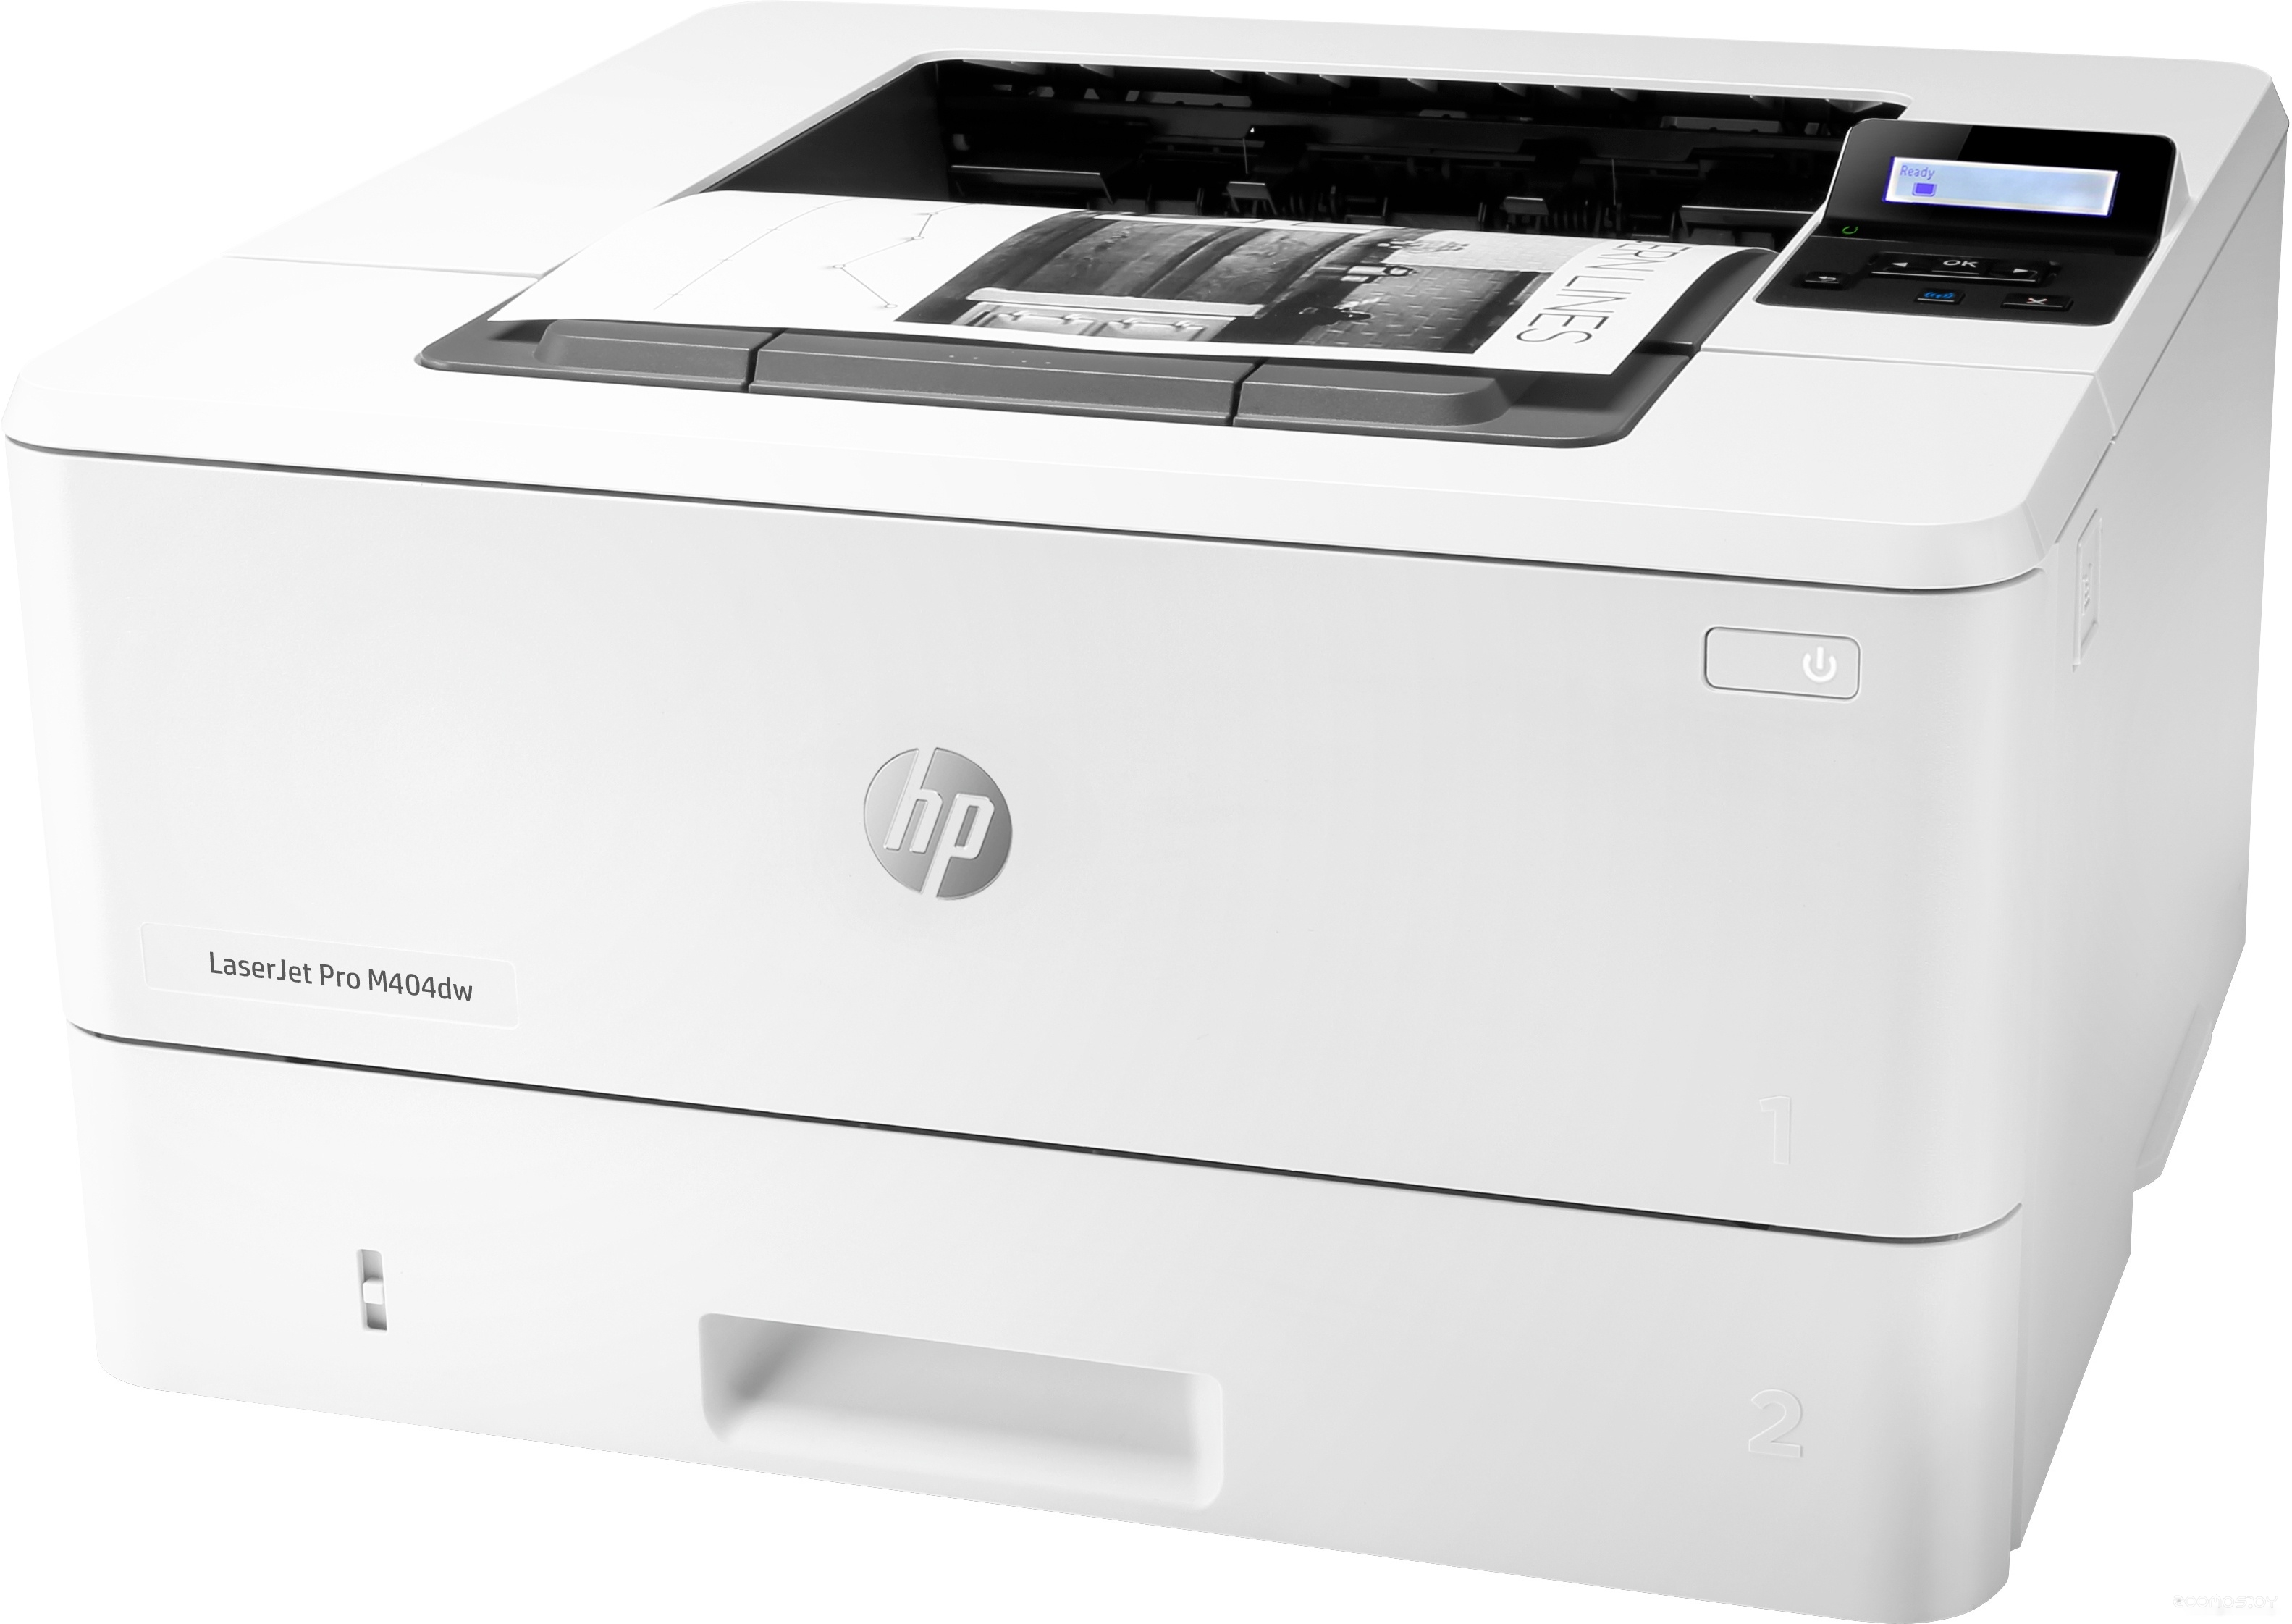  HP LaserJet Pro M404dw     